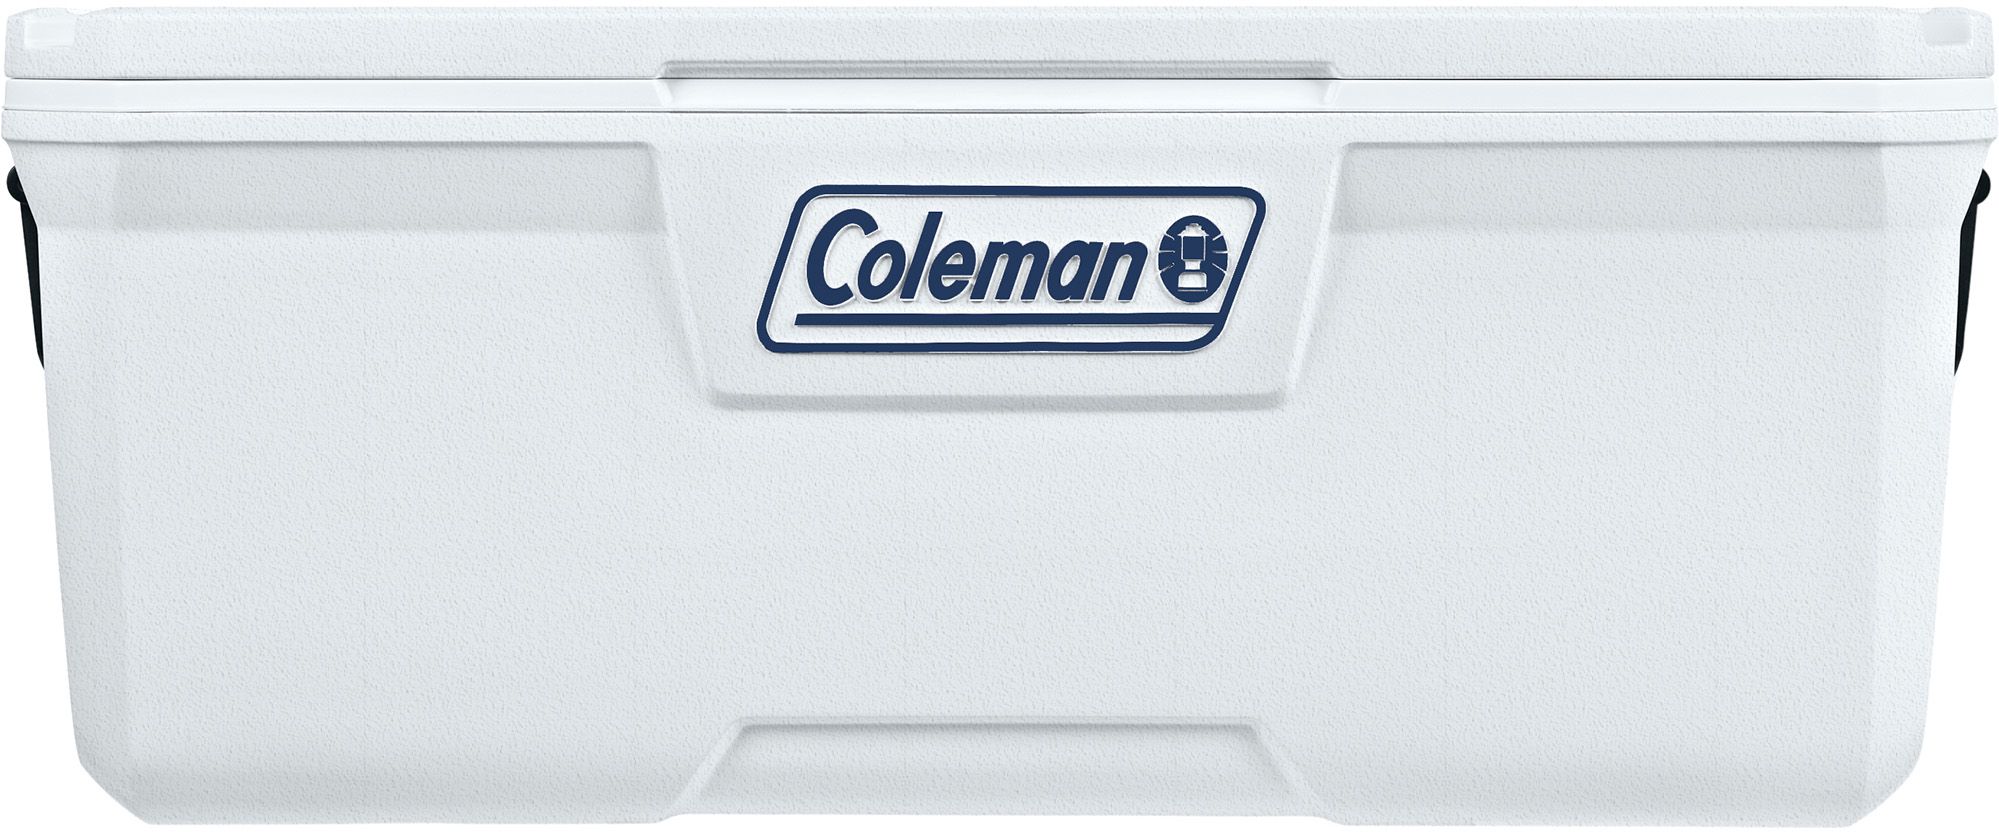 coleman ice chest